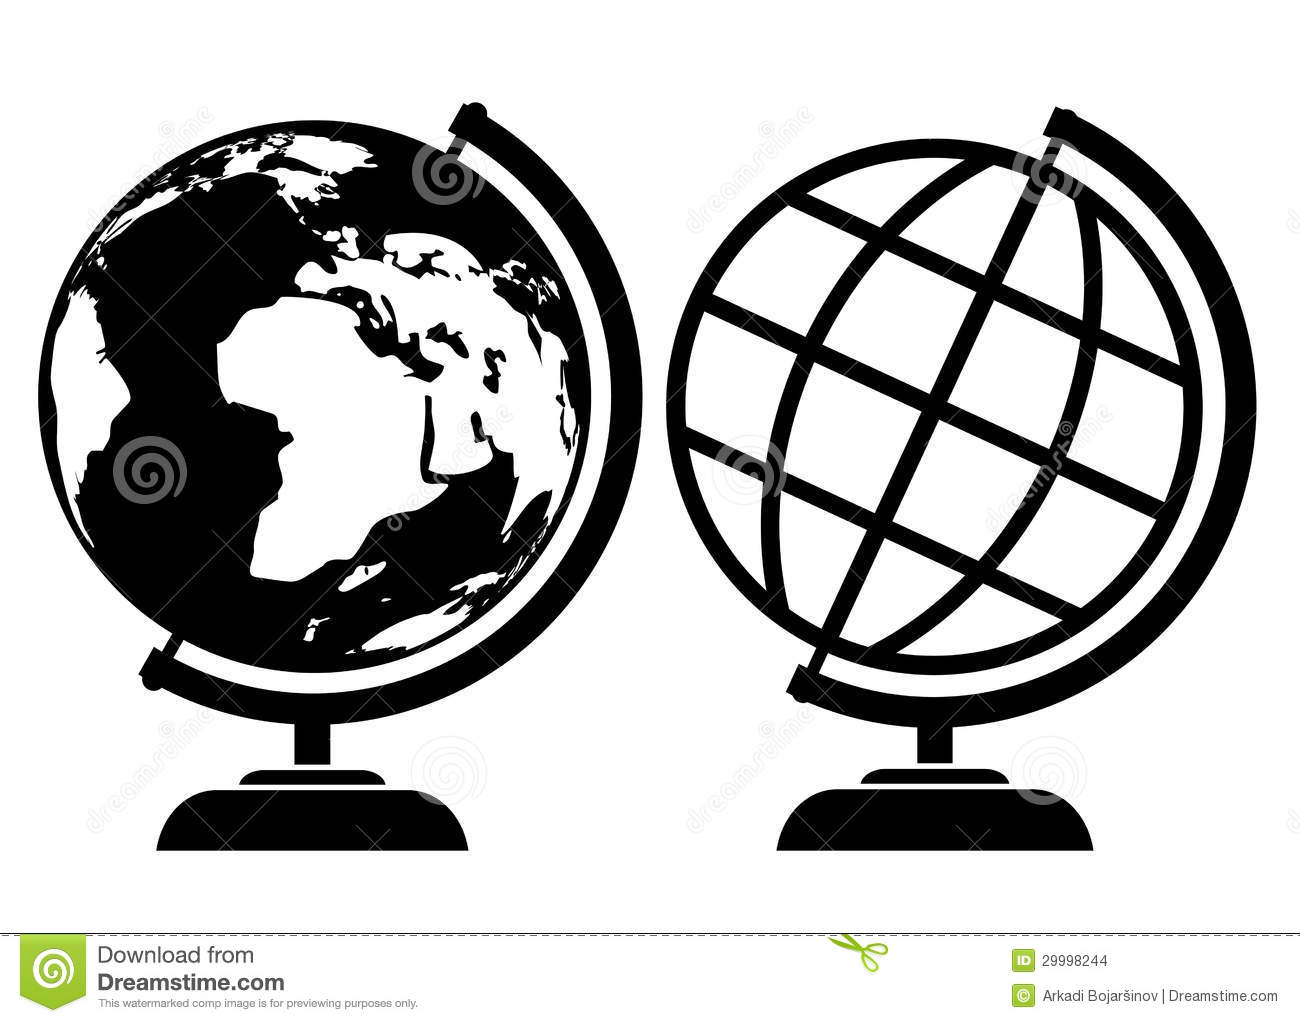 Globe Icon Vector Free